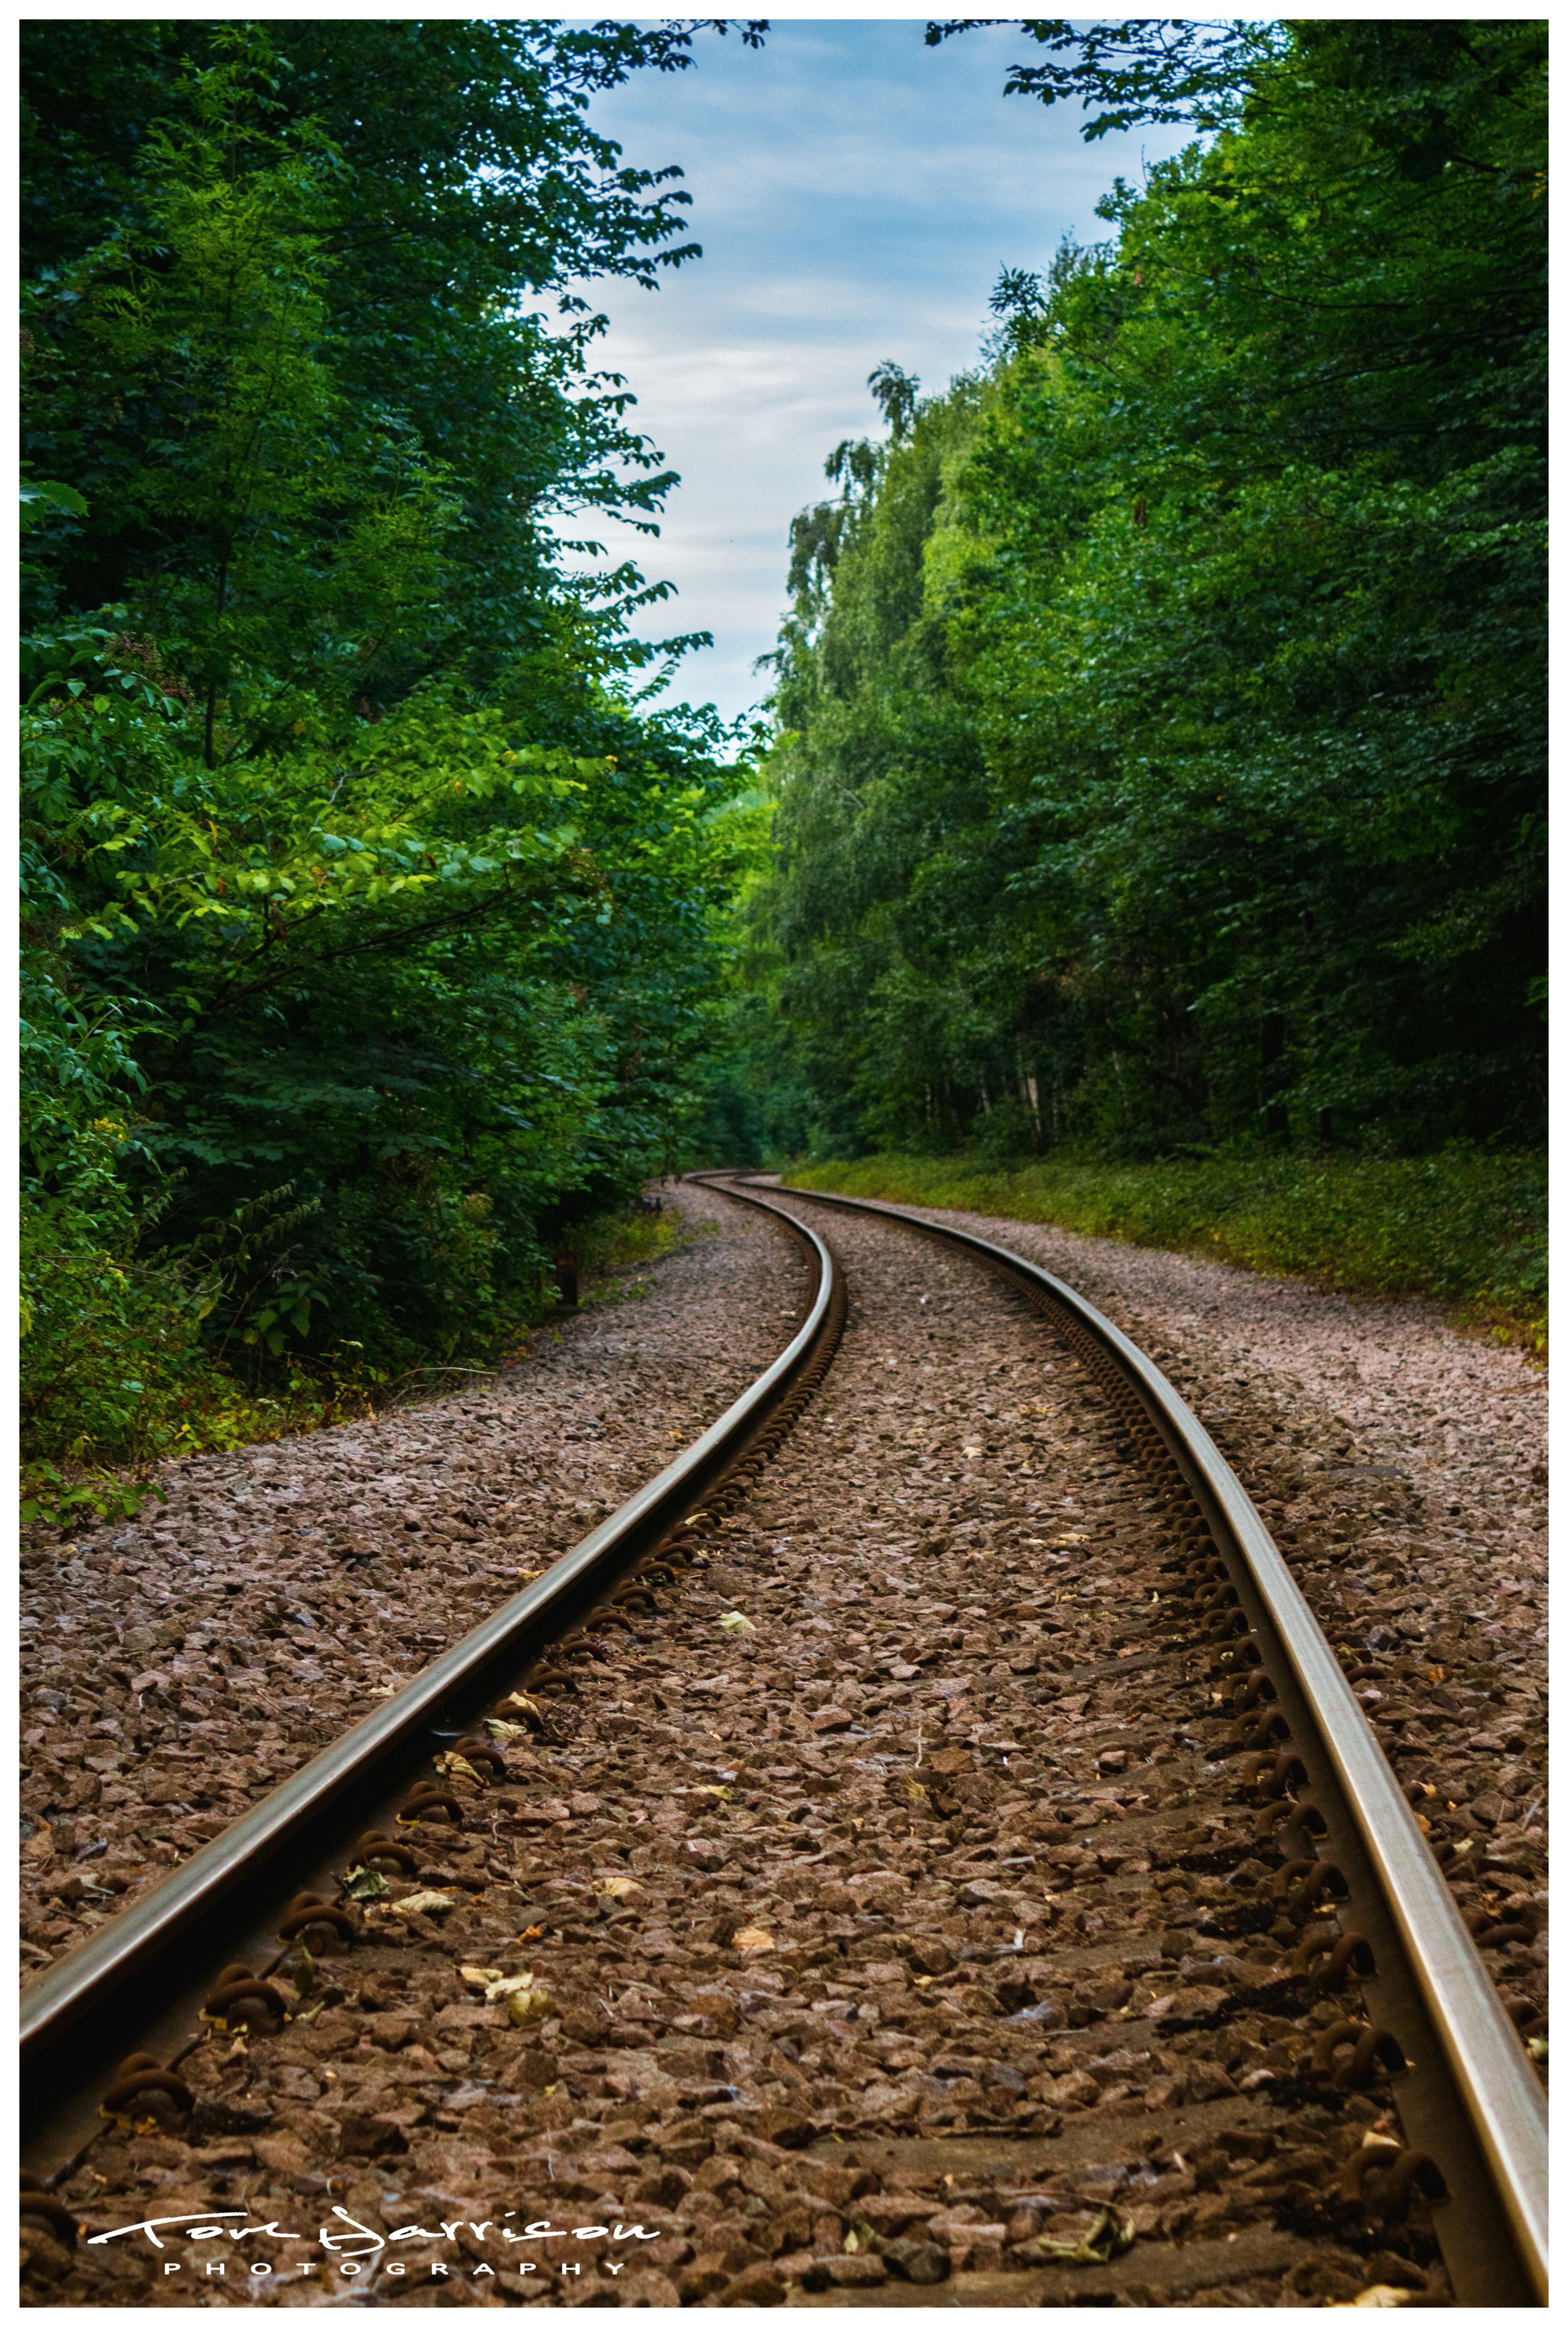 Free stock photo of train tracks, trees, woods